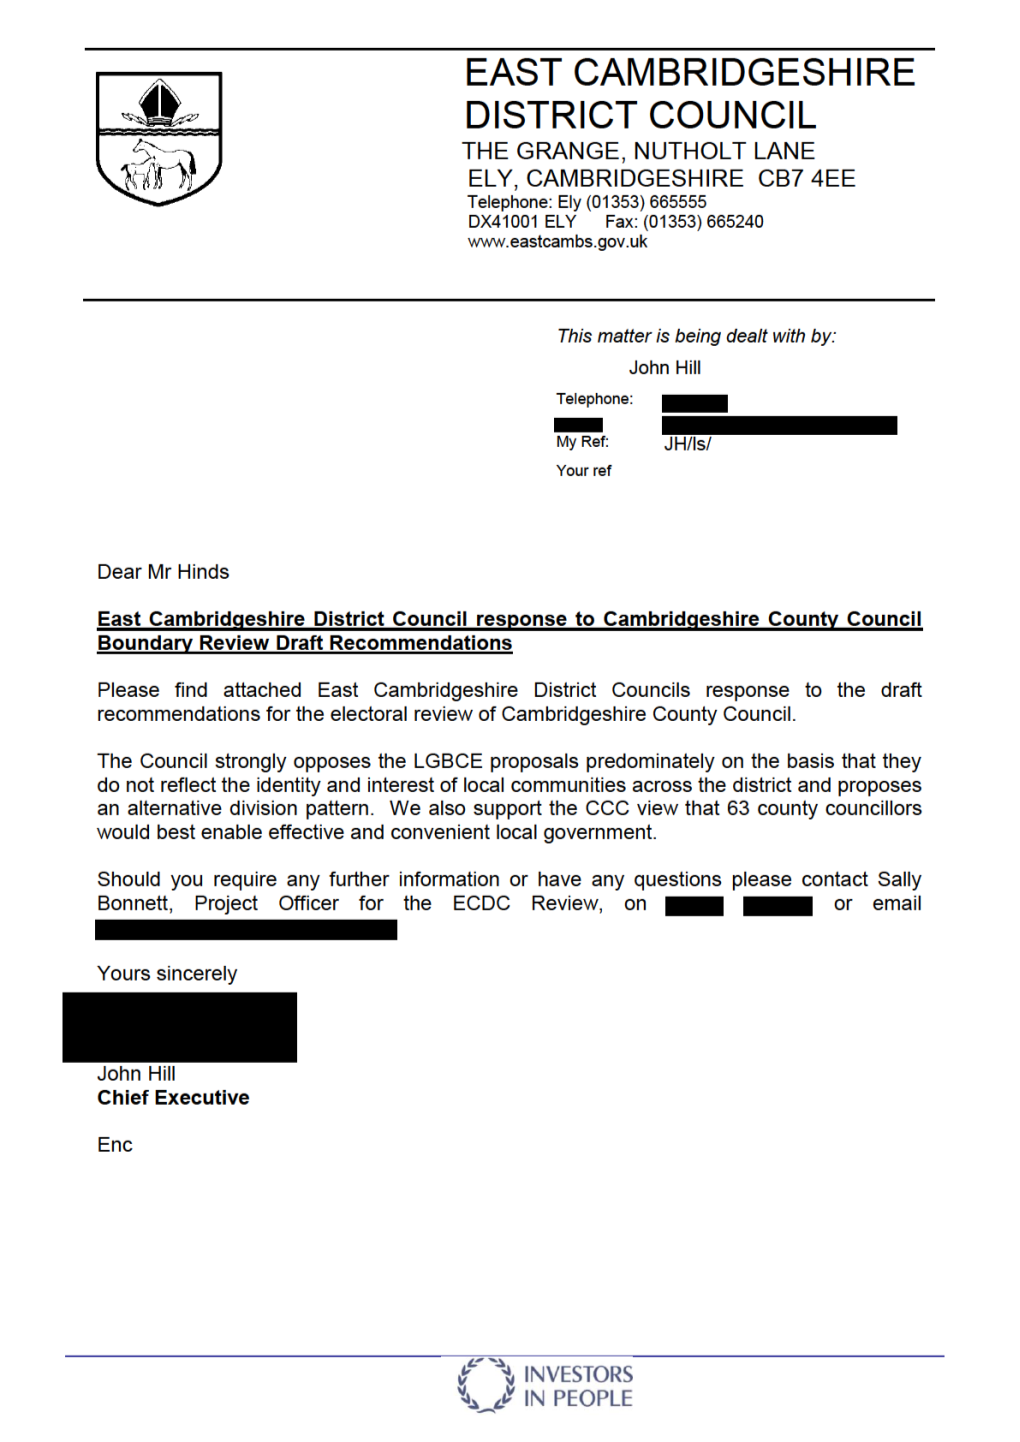 East Cambridgeshire District Council Response to Cambridgeshire County Council Boundary Review Draft Recommendations